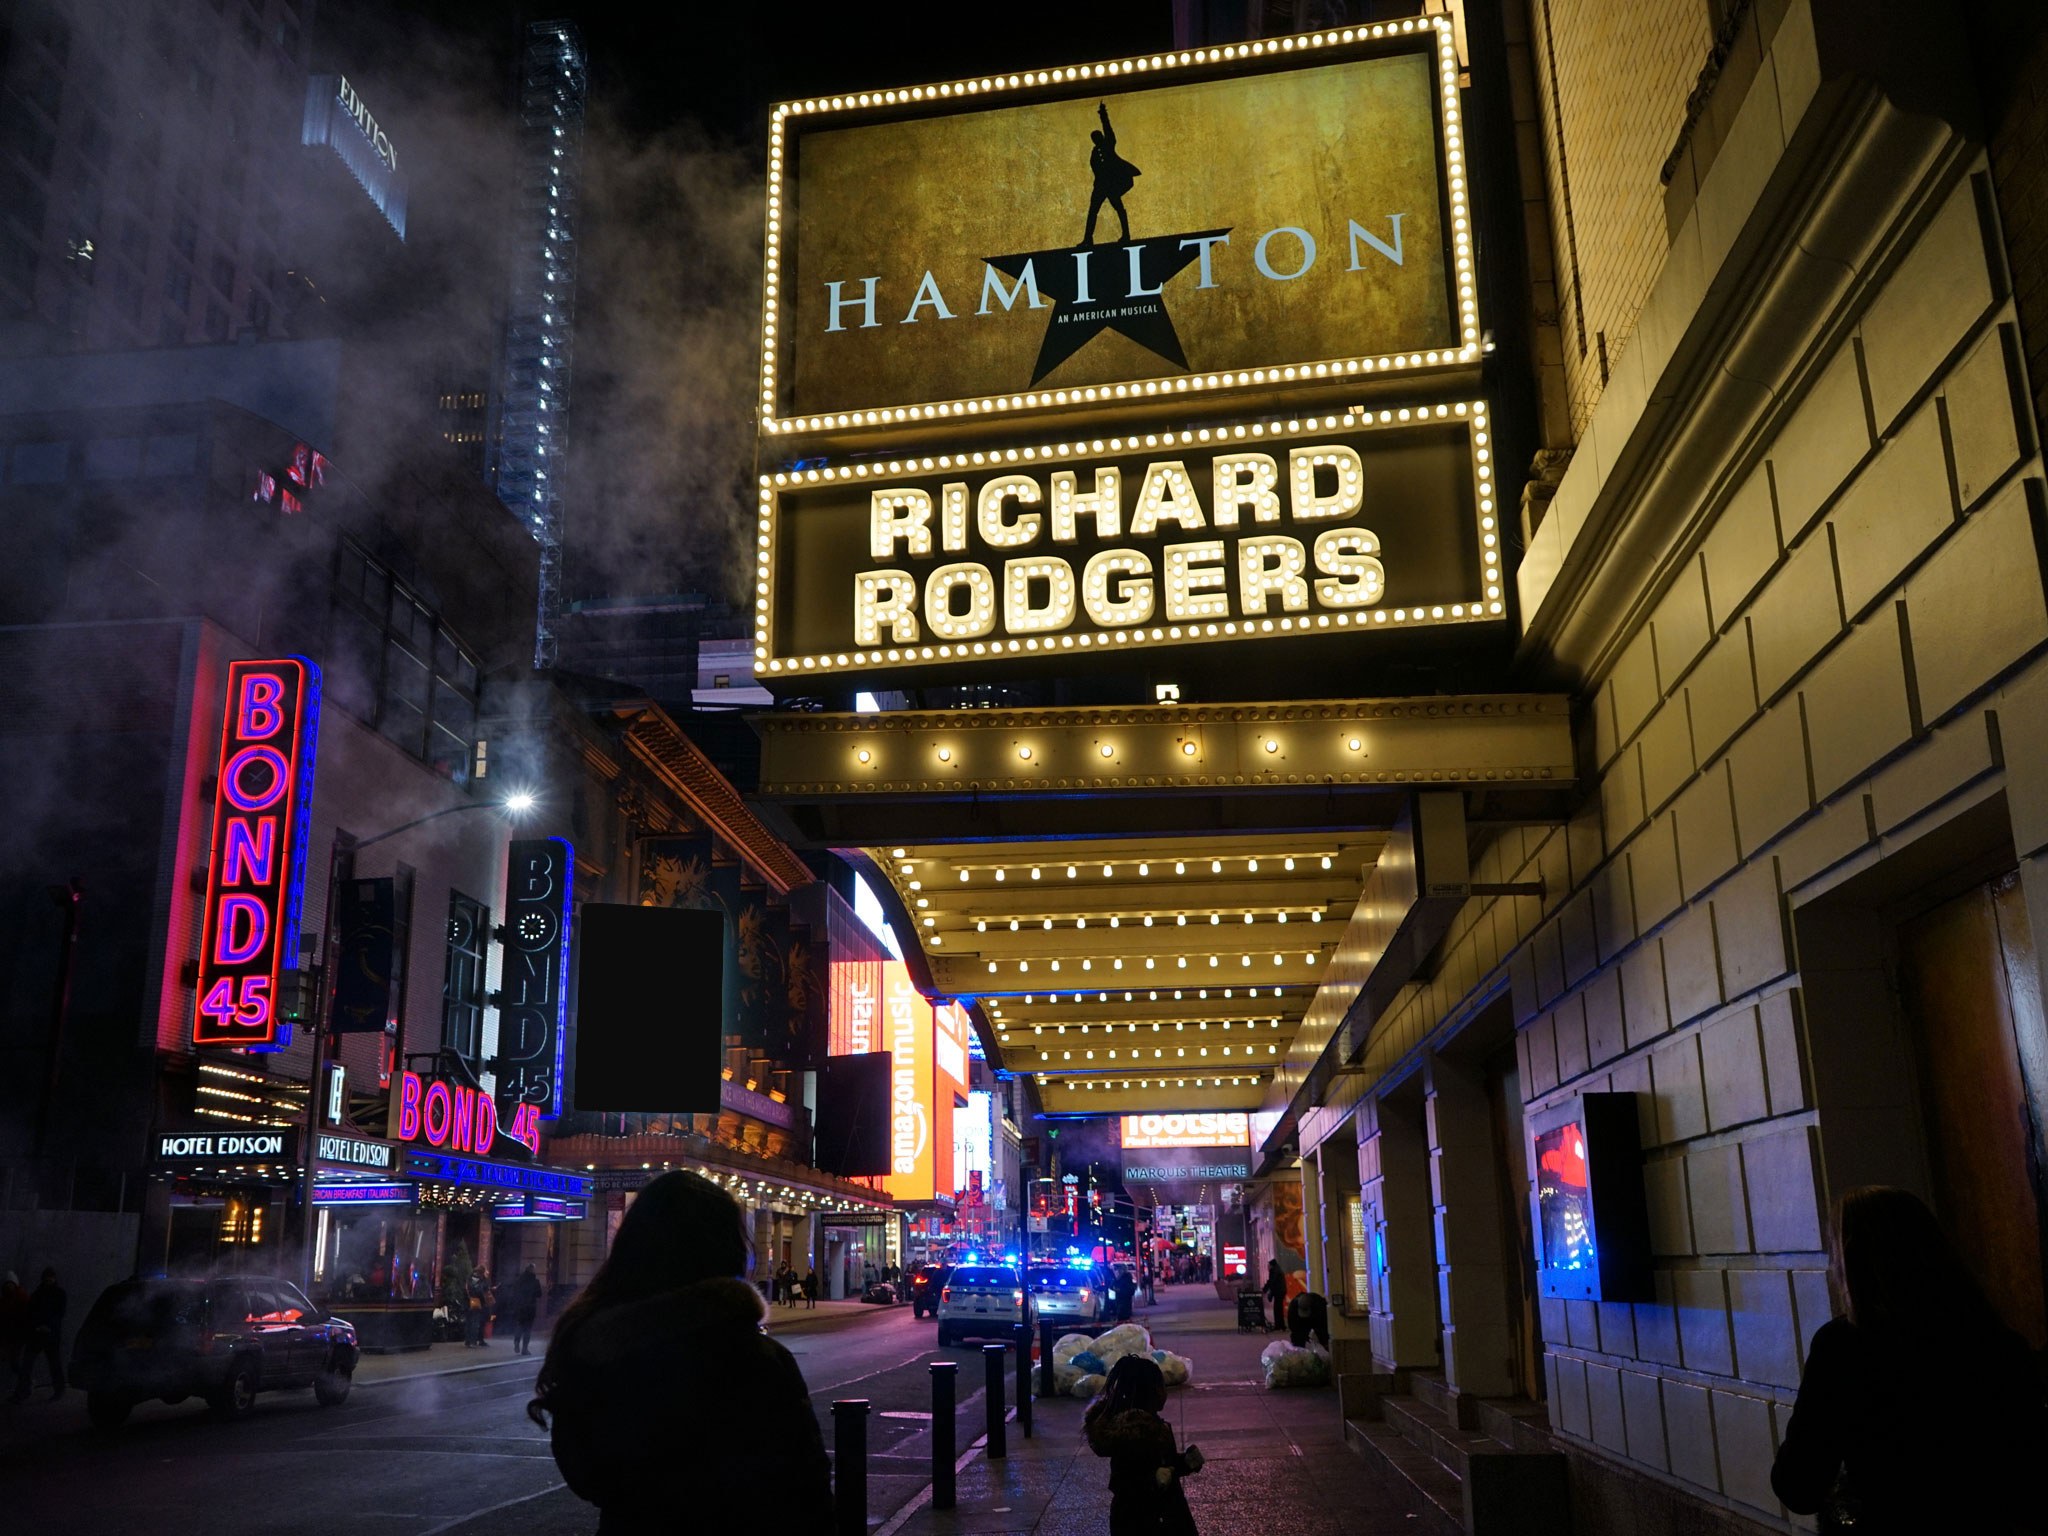 Hamilton Richard Rodgers Broadway Theatre Marquee